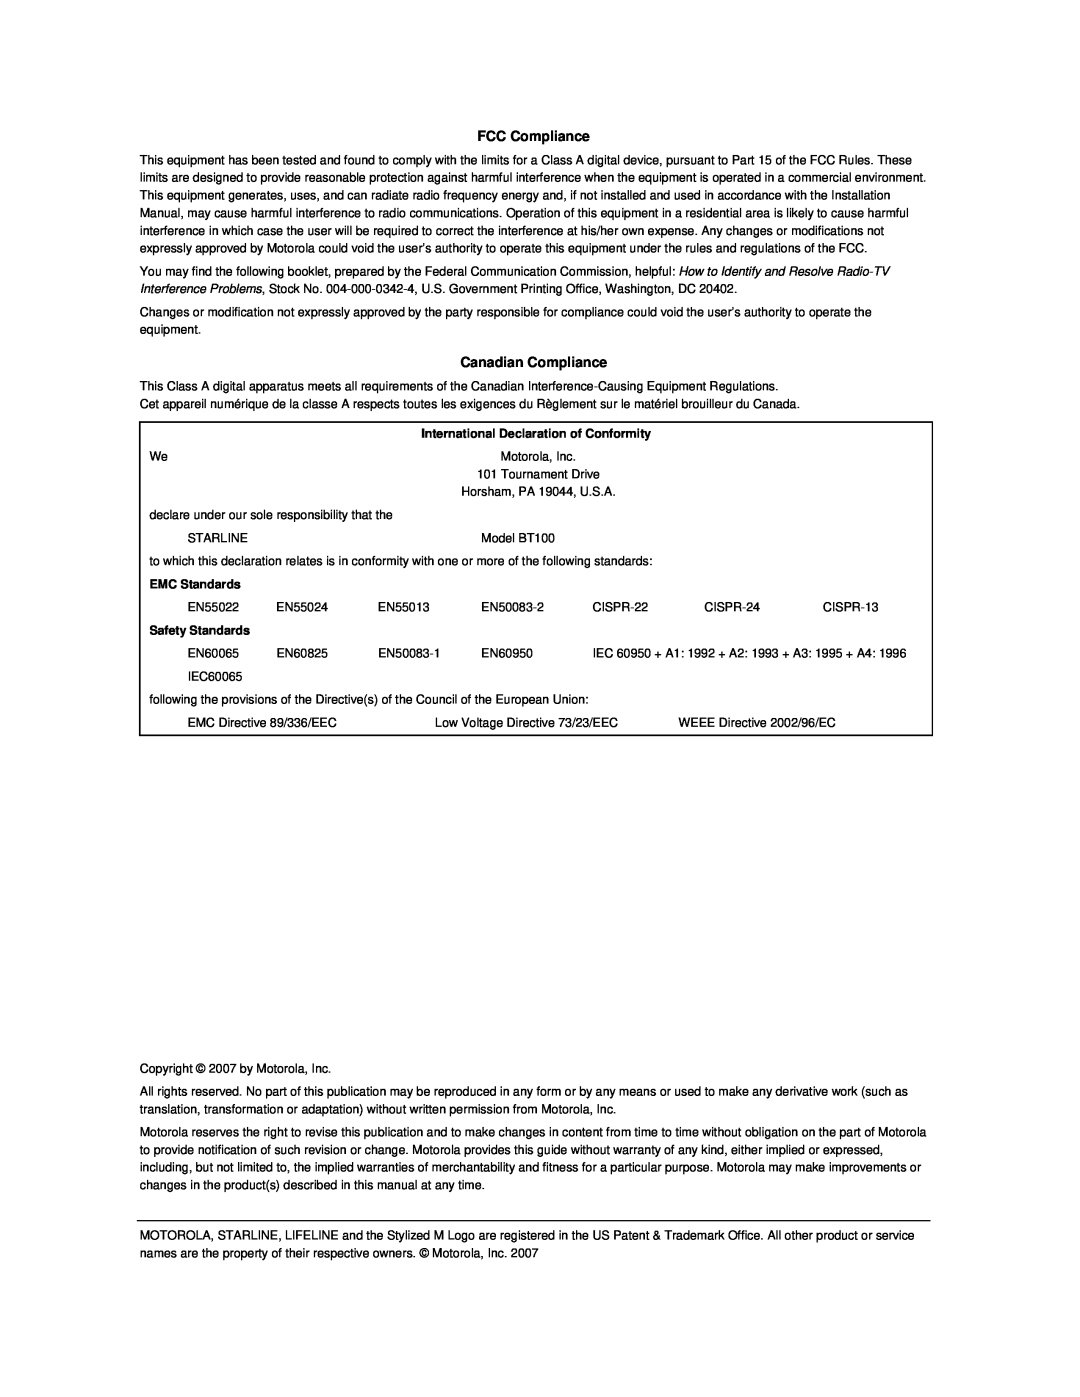 Motorola BT100 operation manual FCC Compliance, Canadian Compliance, International Declaration of Conformity, EMC Standards 